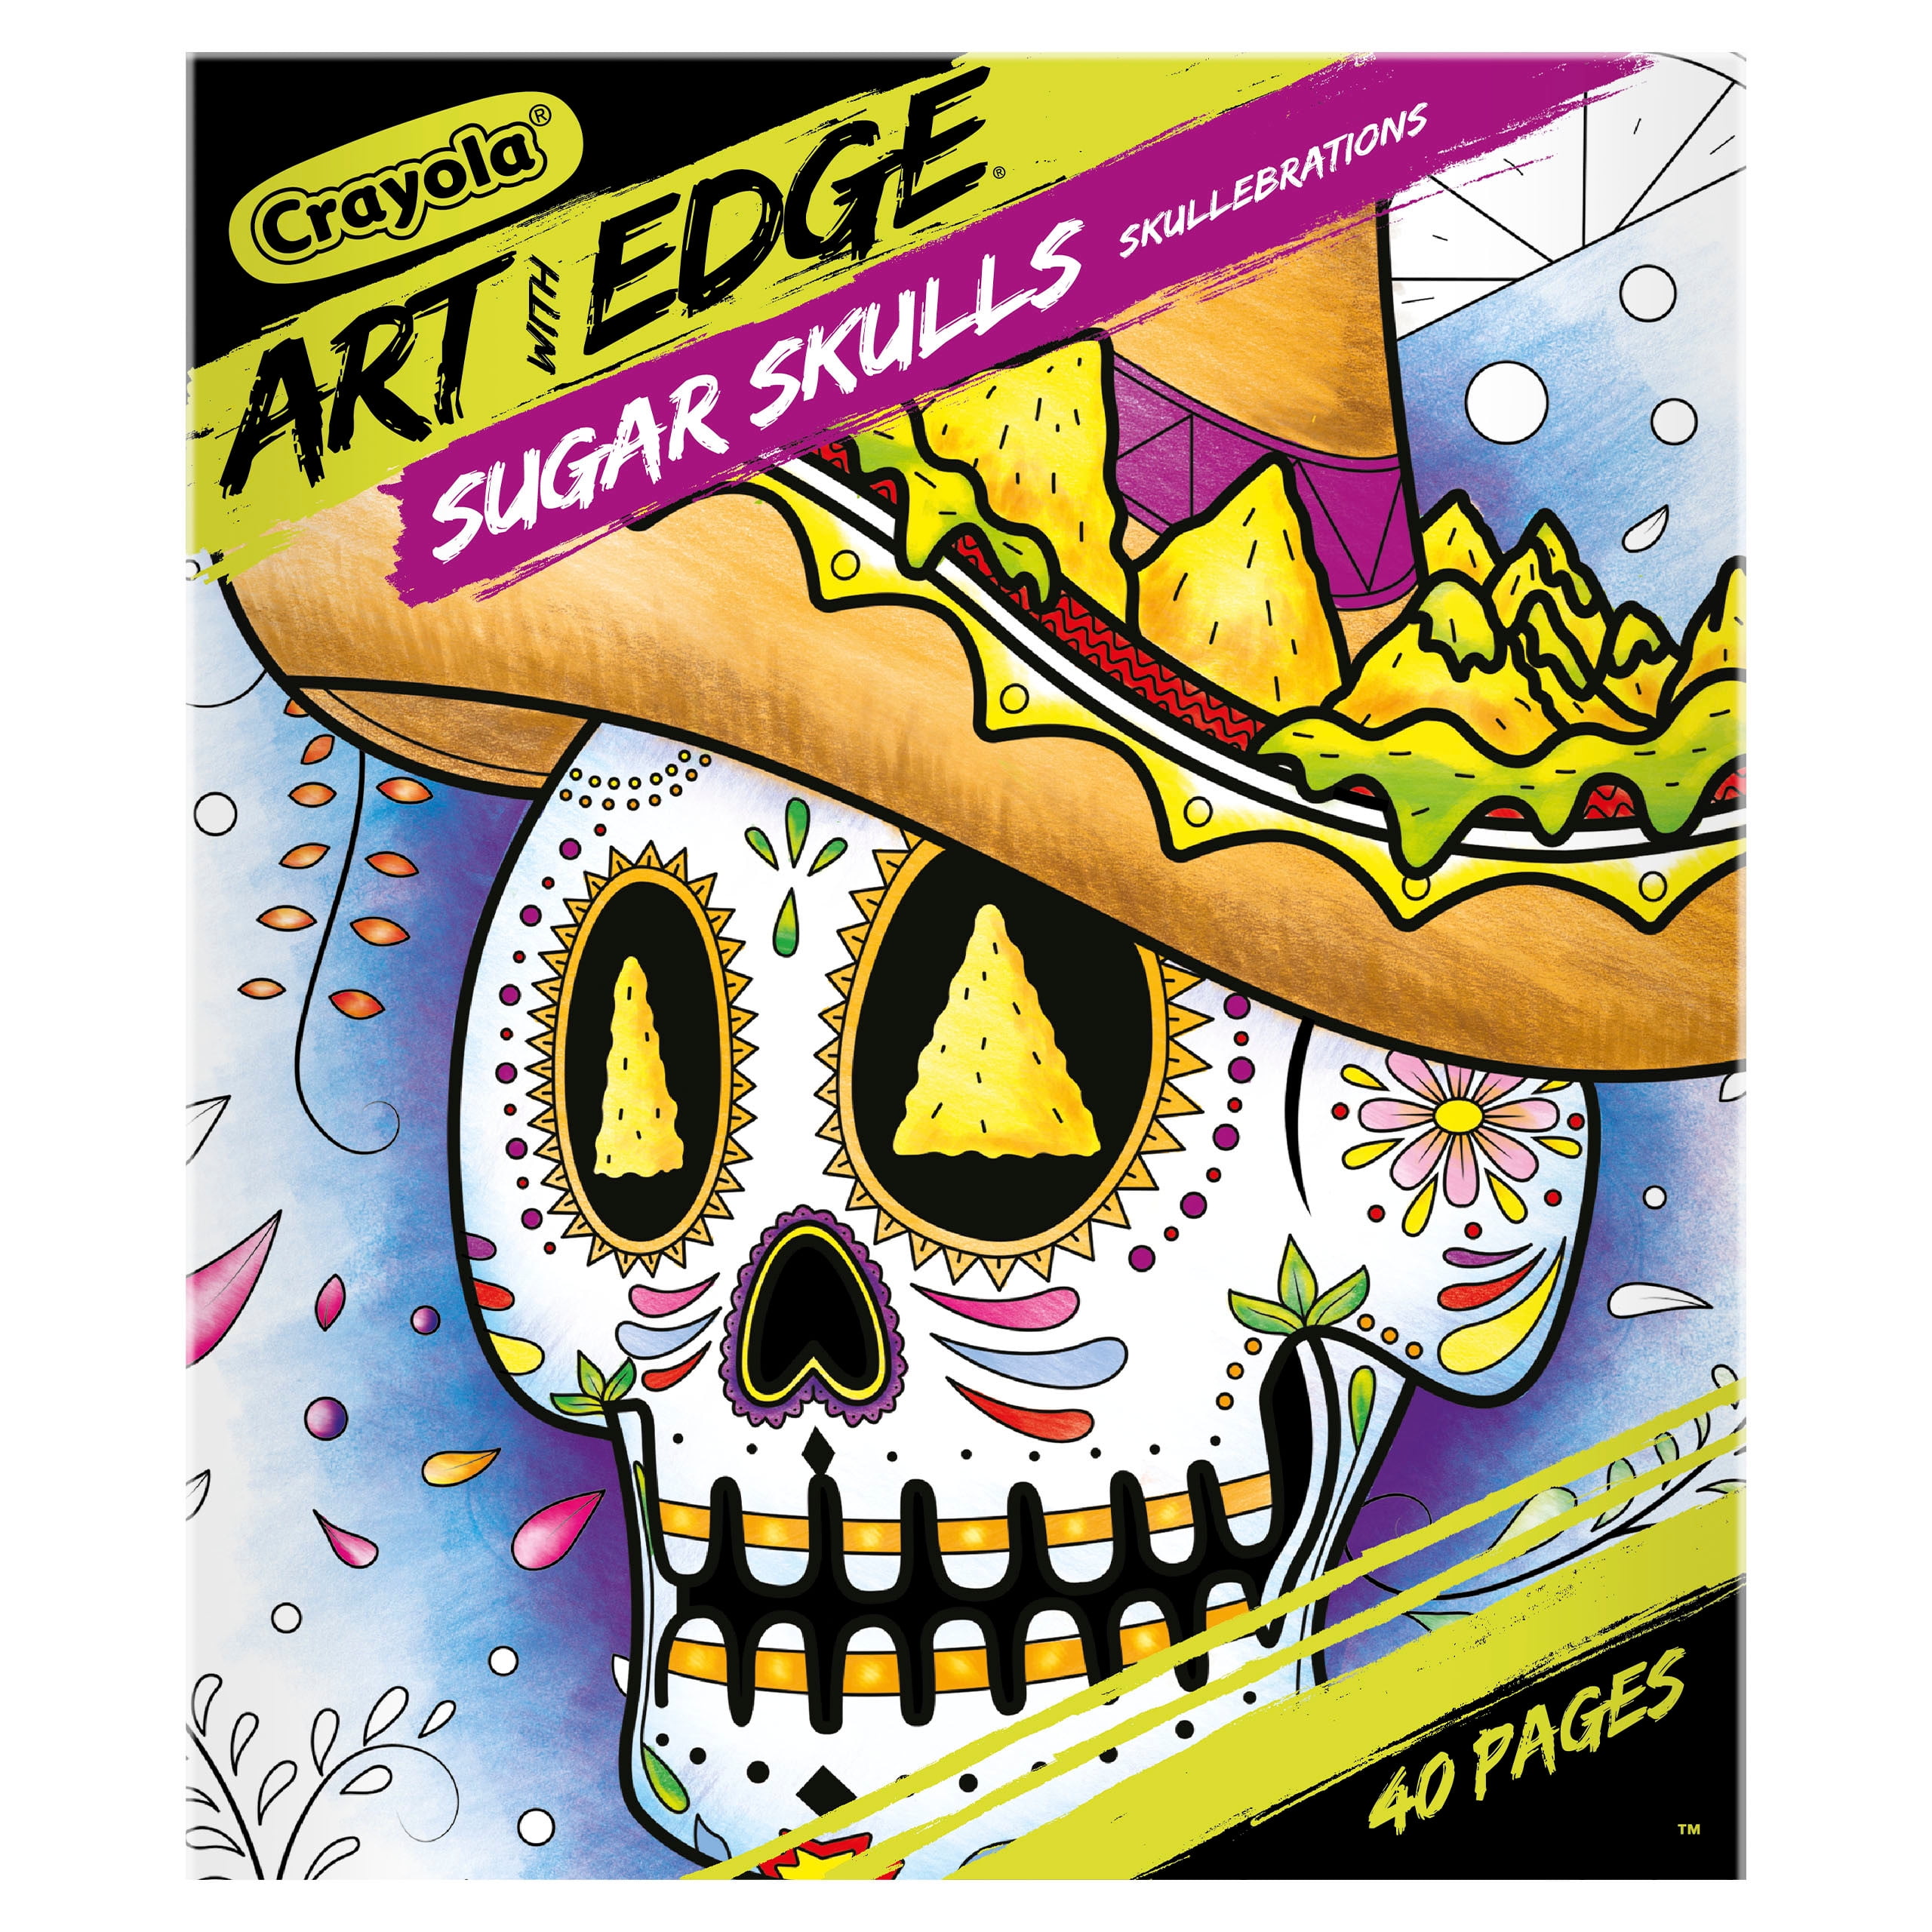 Crayola Art with Edge Sugar Skulls Coloring Books, 40 Pages, Volume 3 Child, Unisex